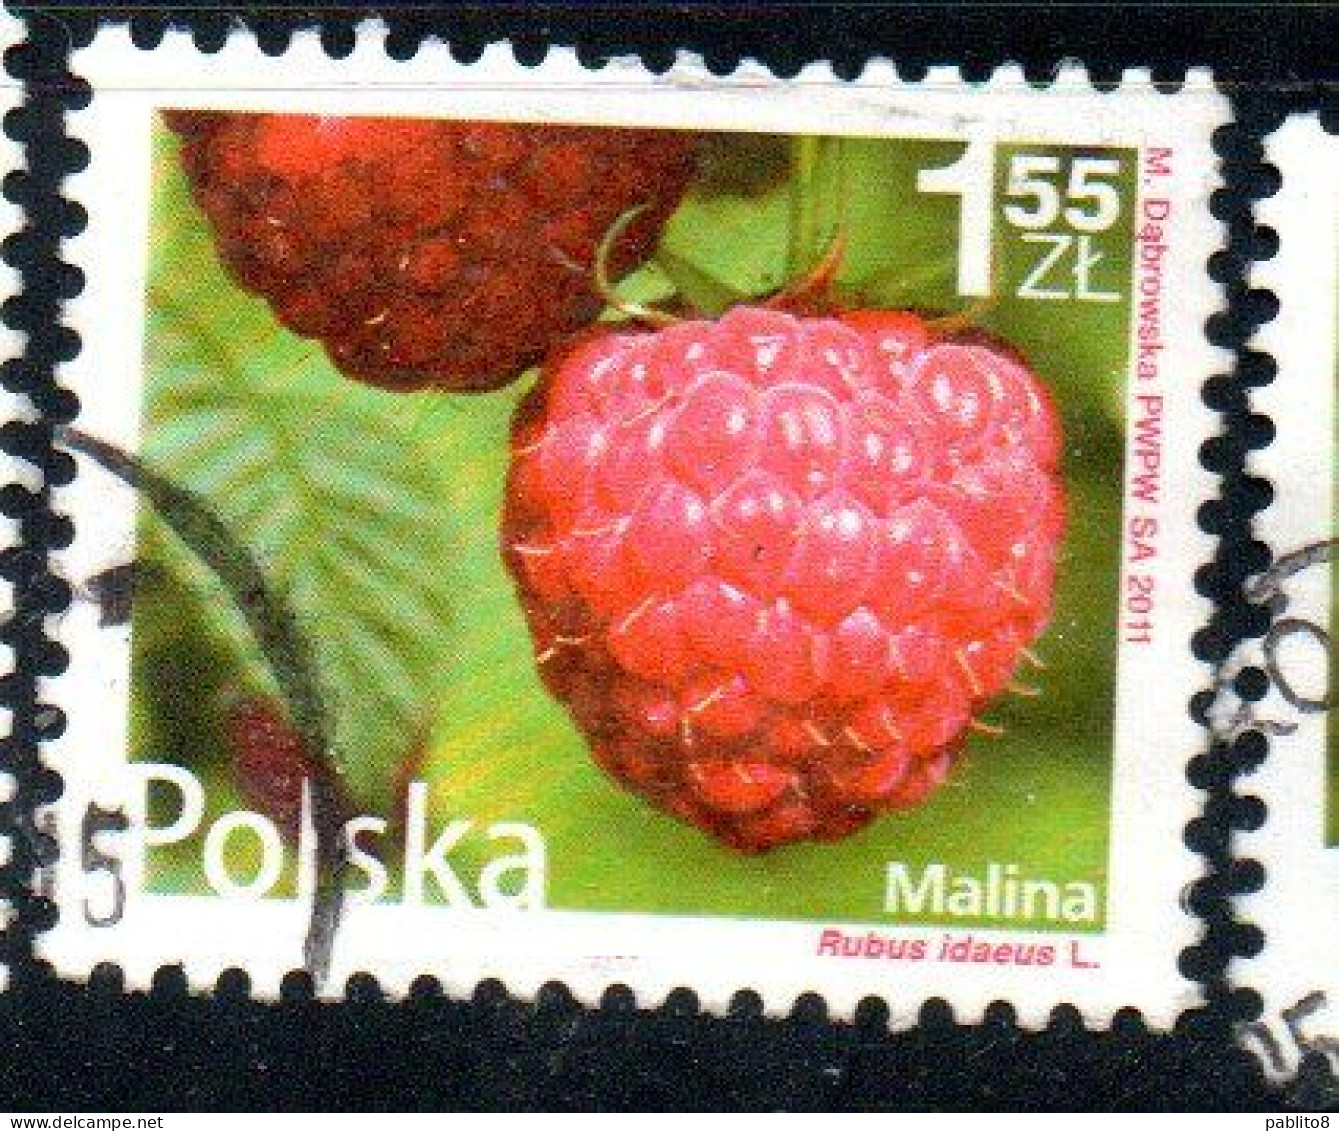 POLONIA POLAND POLSKA 2011 FRUIT AND FLOWERS RUBUS IDAEUS 1.55z USED USATO OBLITERE' - Gebruikt